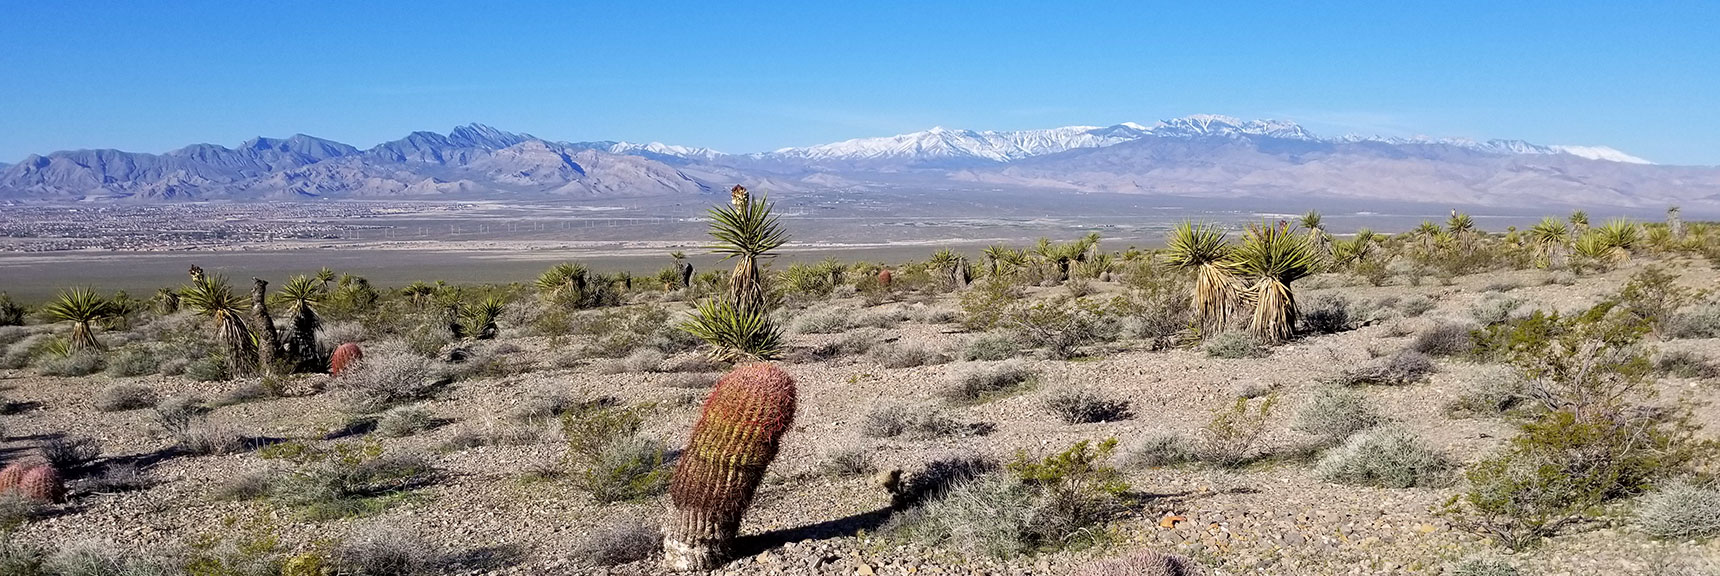 Assortment of Desert Plants South of Gass Peak, Nevada